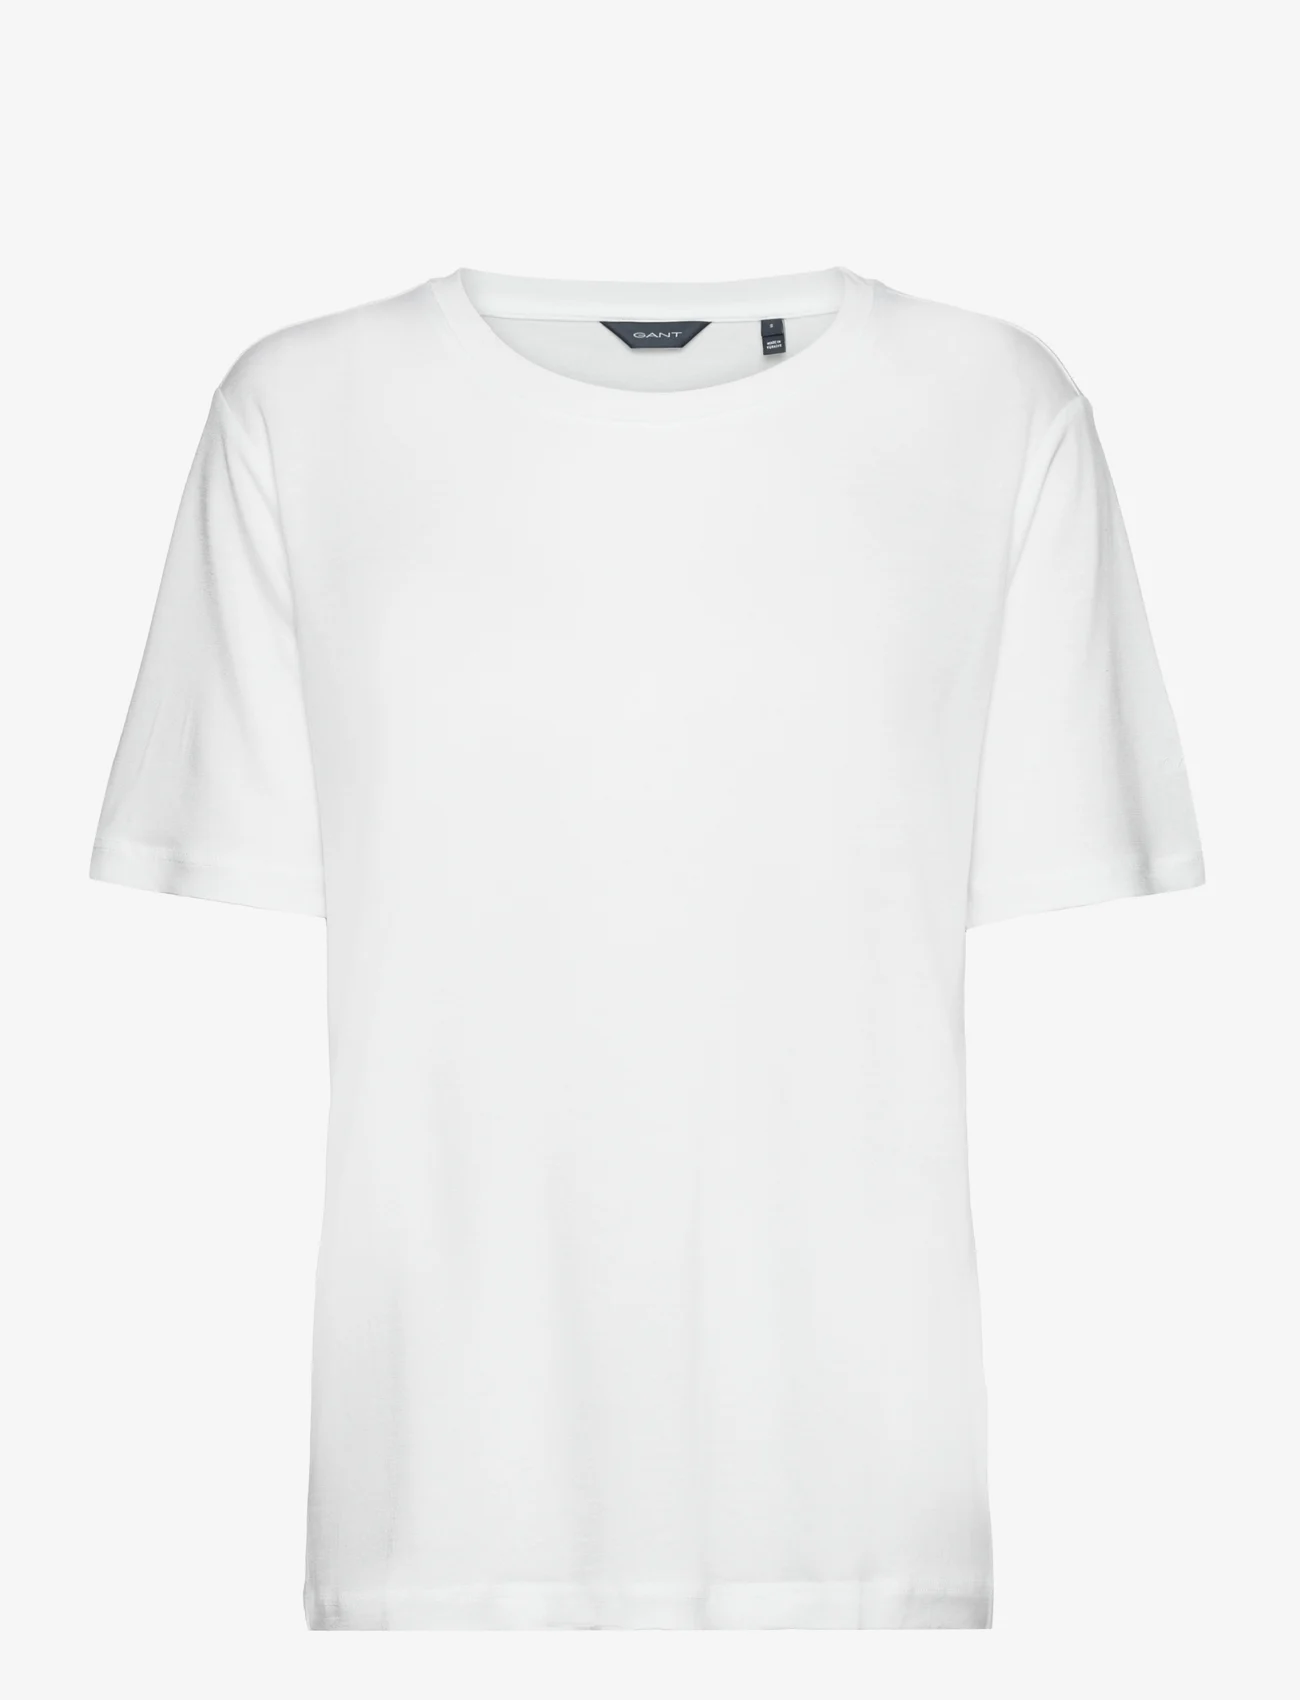 GANT - REL DRAPED SS T-SHIRT - t-shirts - white - 0